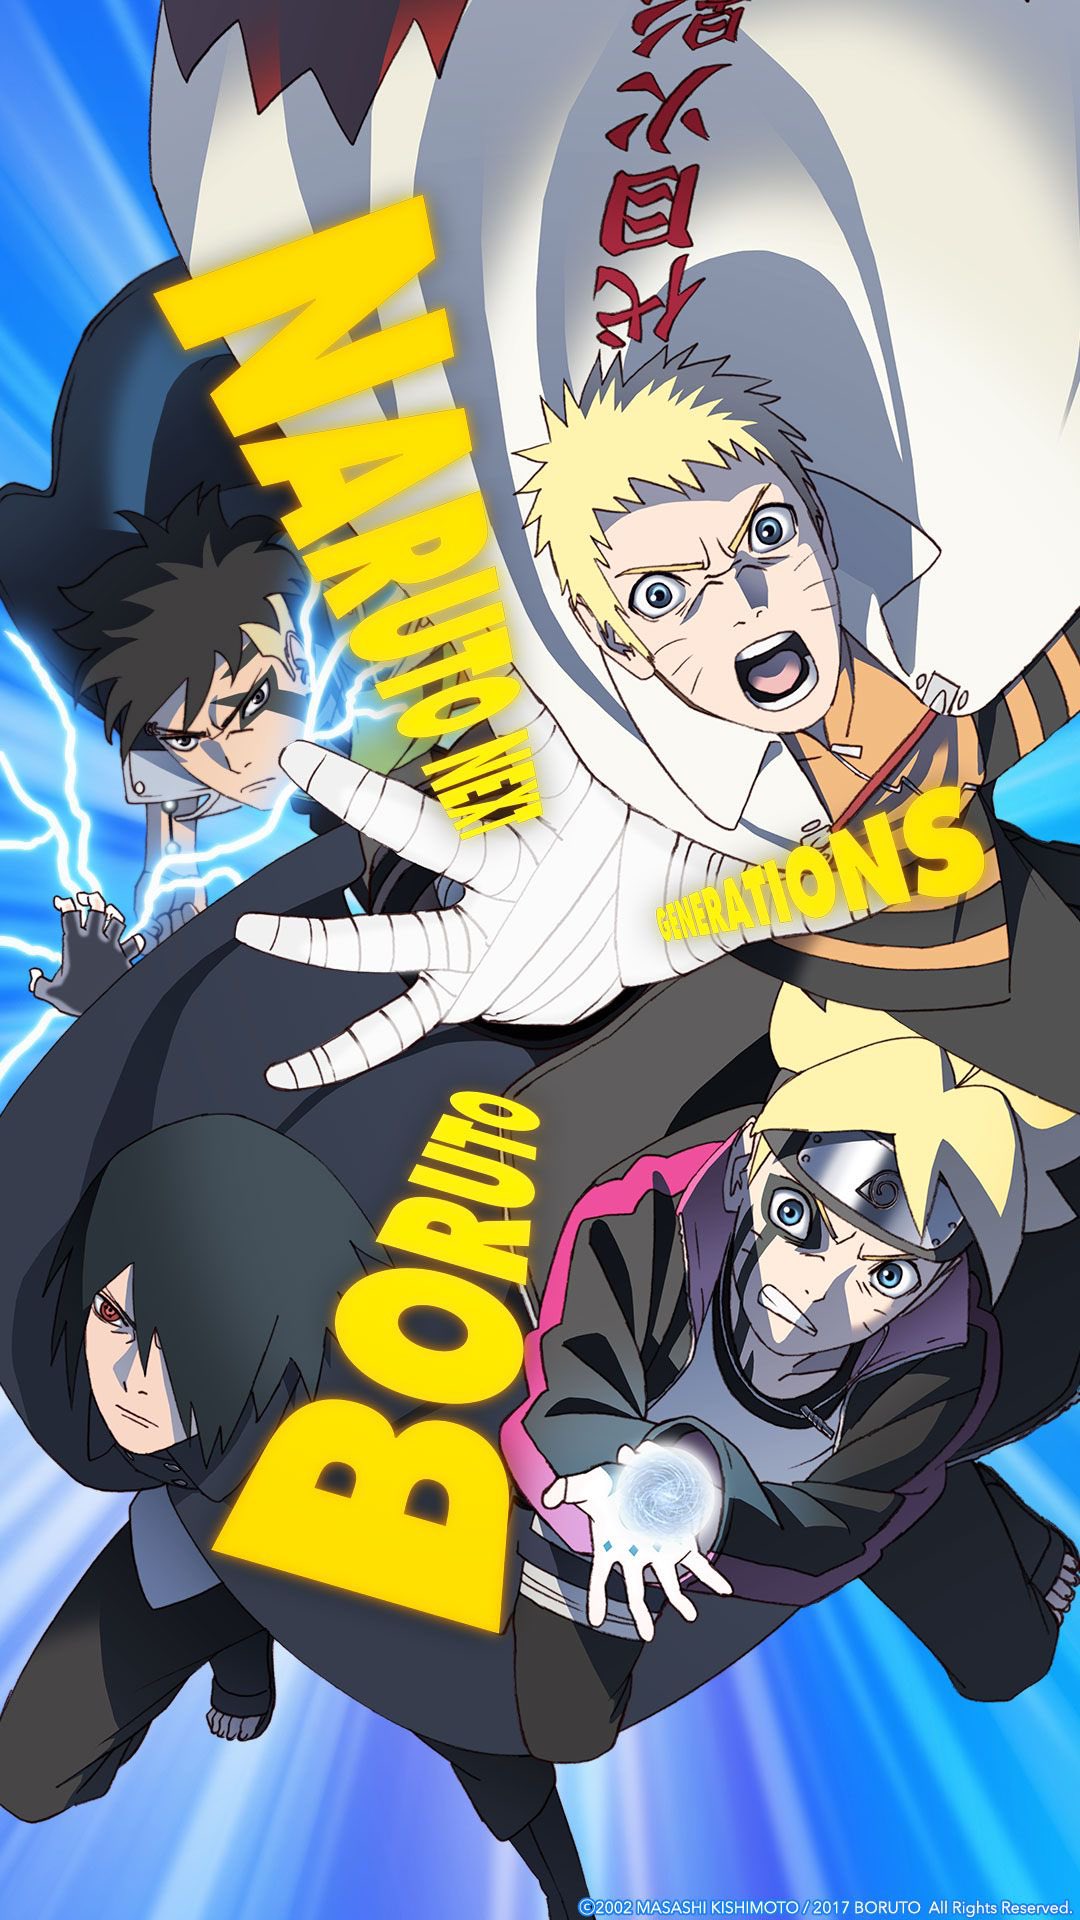 Otsutsuki Anime - ⚠️ Boruto Episode 267 Preview ⚠️